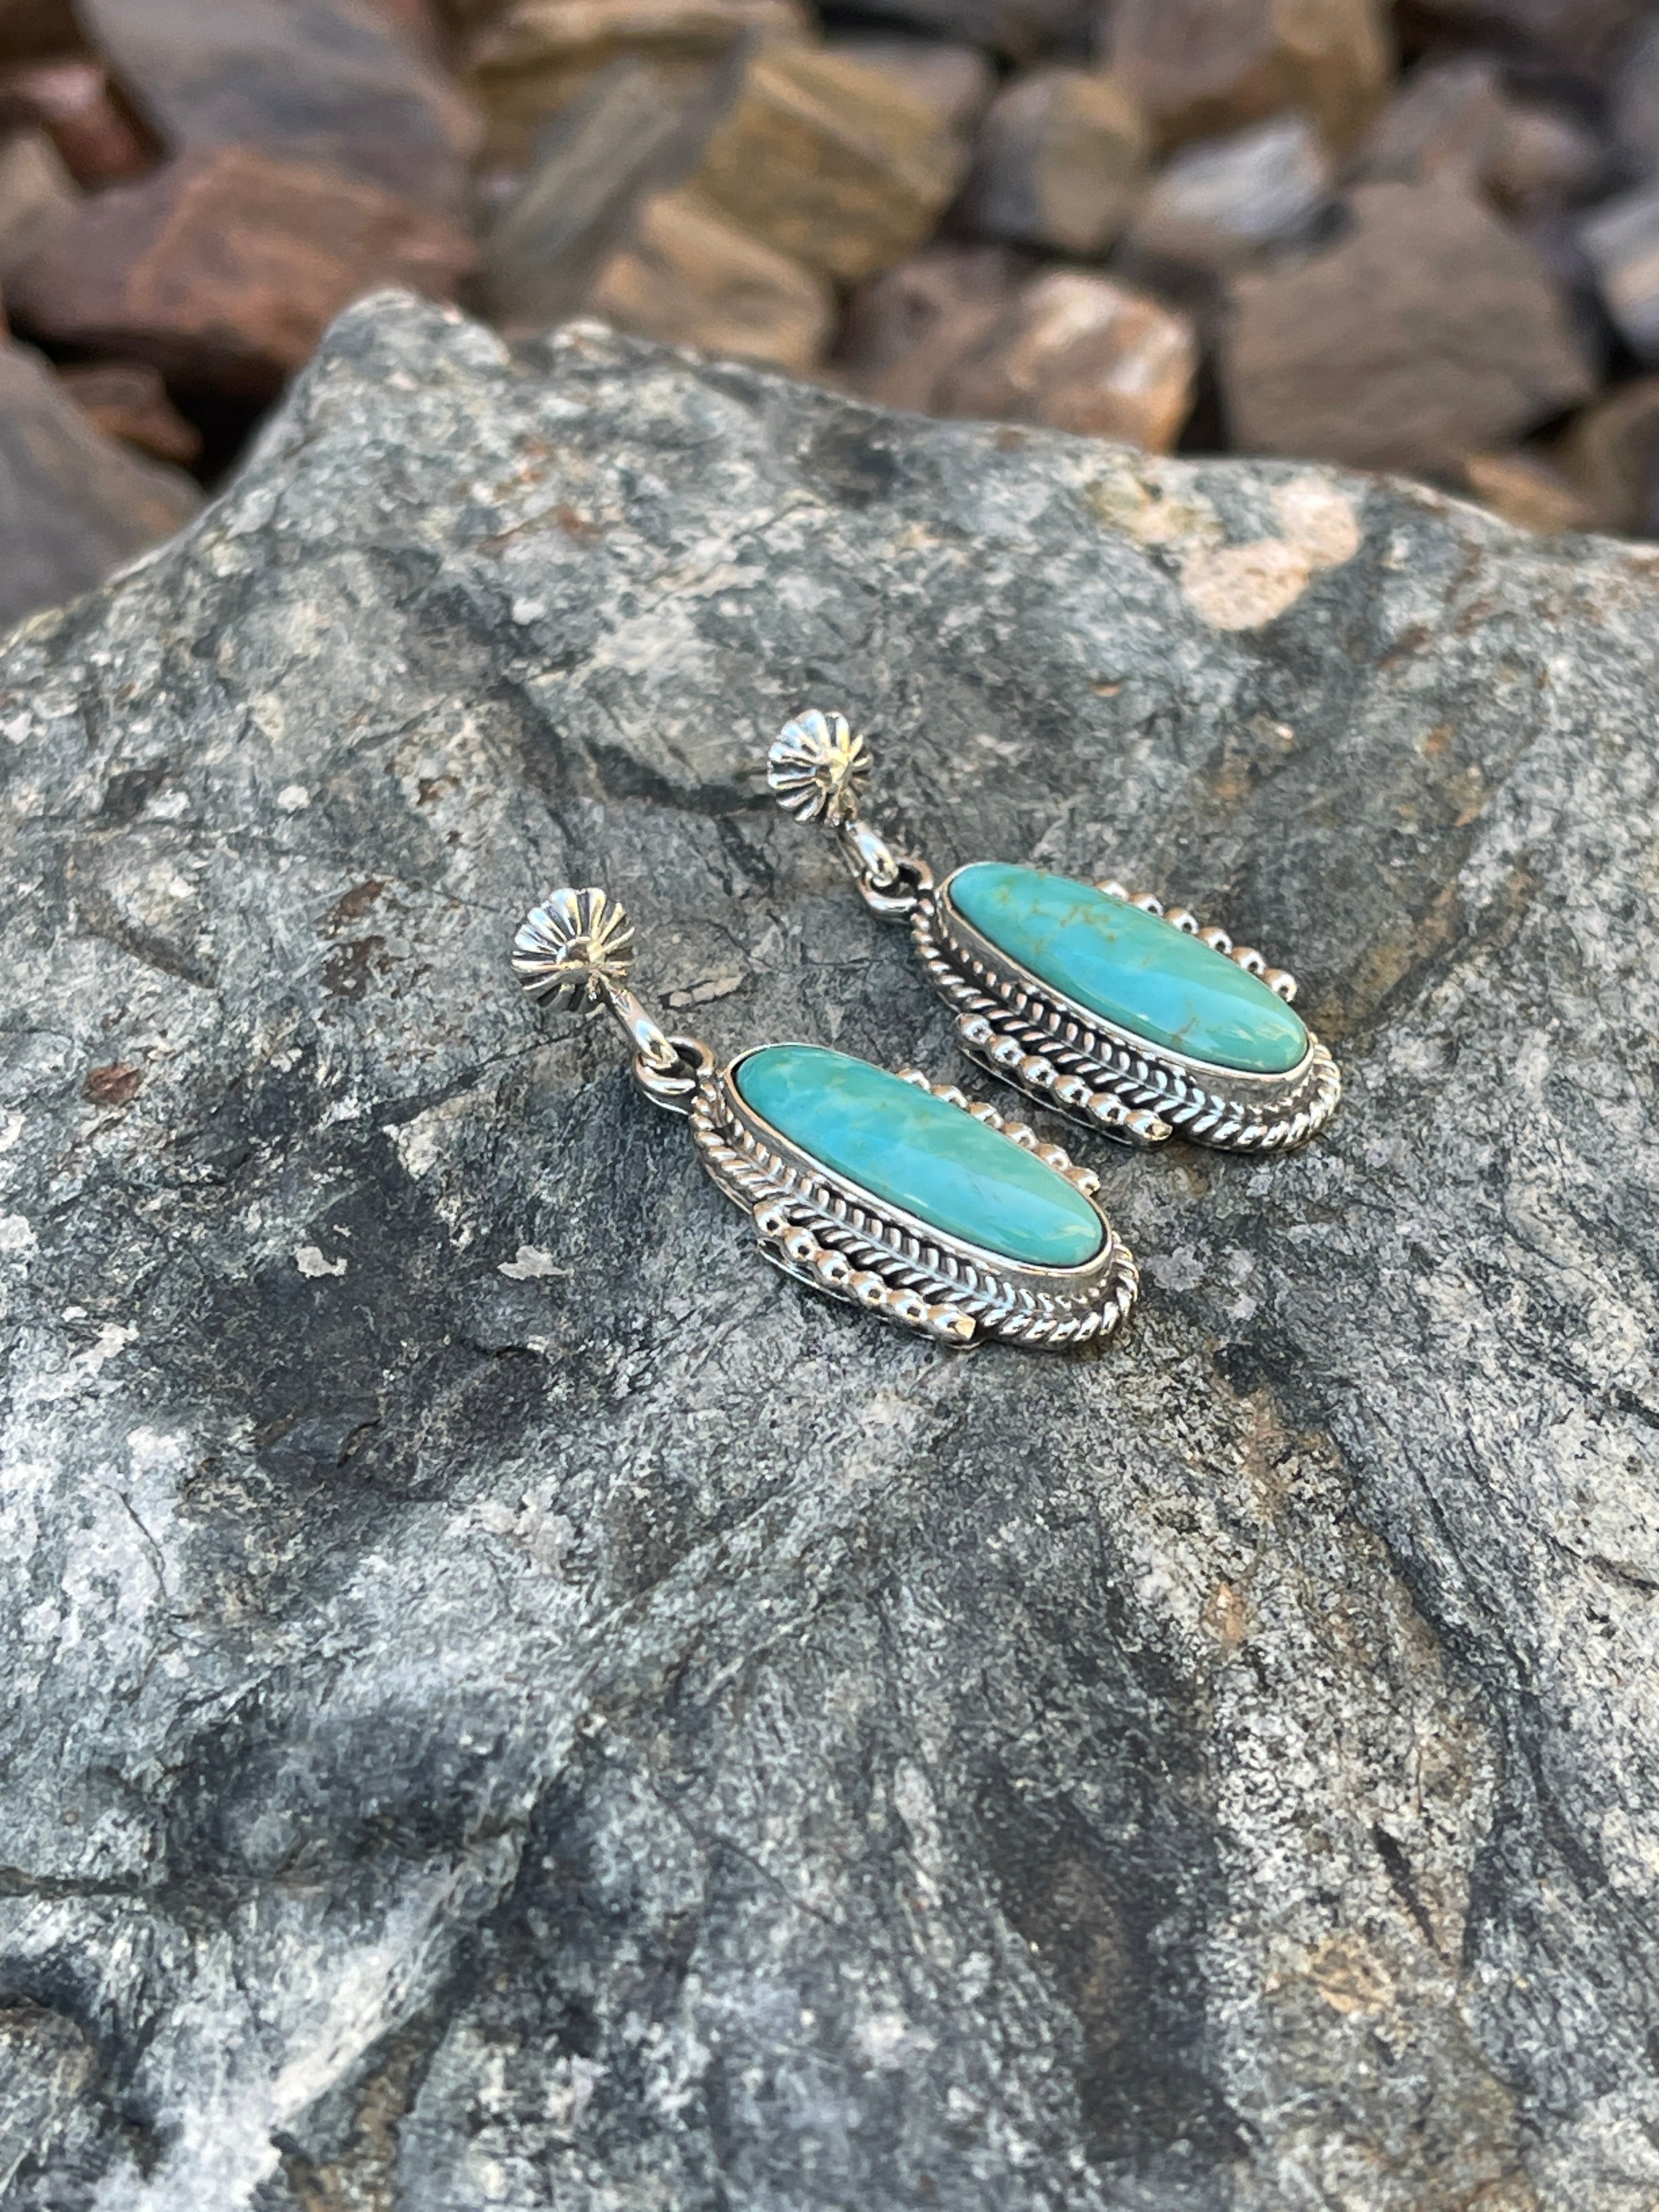 Handmade Sterling Silver Kingman Turquoise Dangle Earrings with Bead Detail